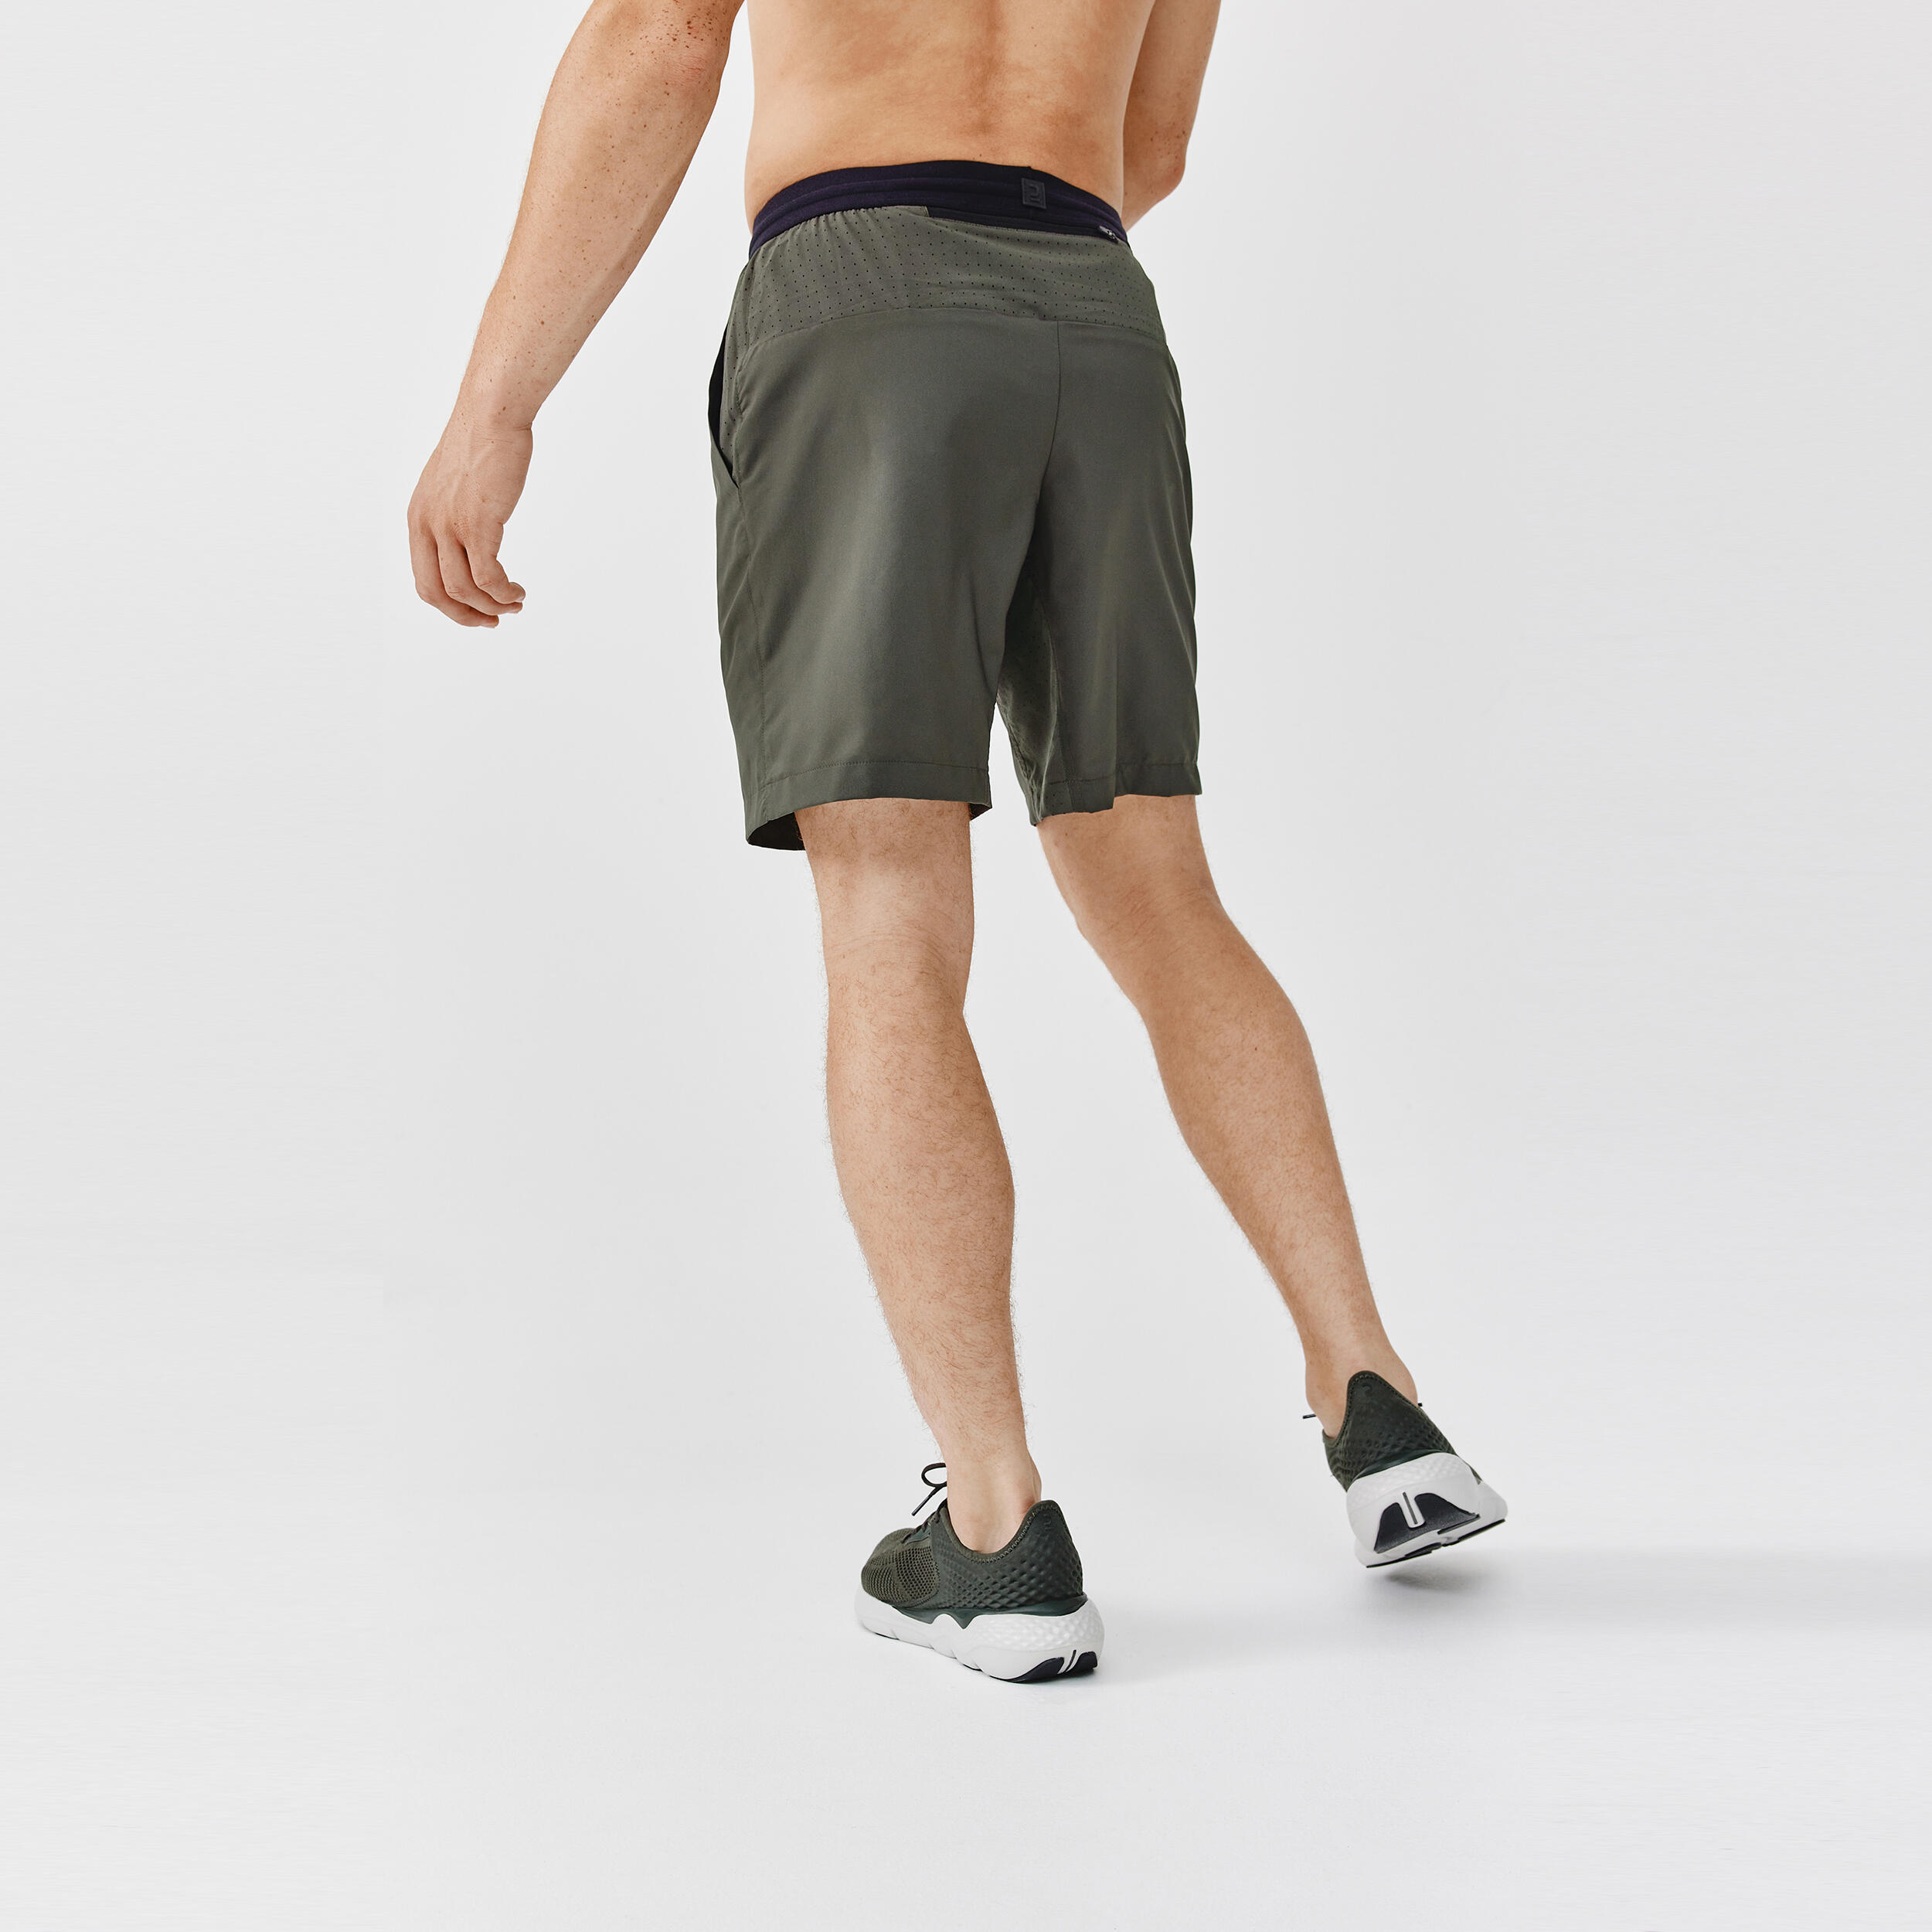 Men's Running Breathable Shorts Dry+ - olive black 5/7